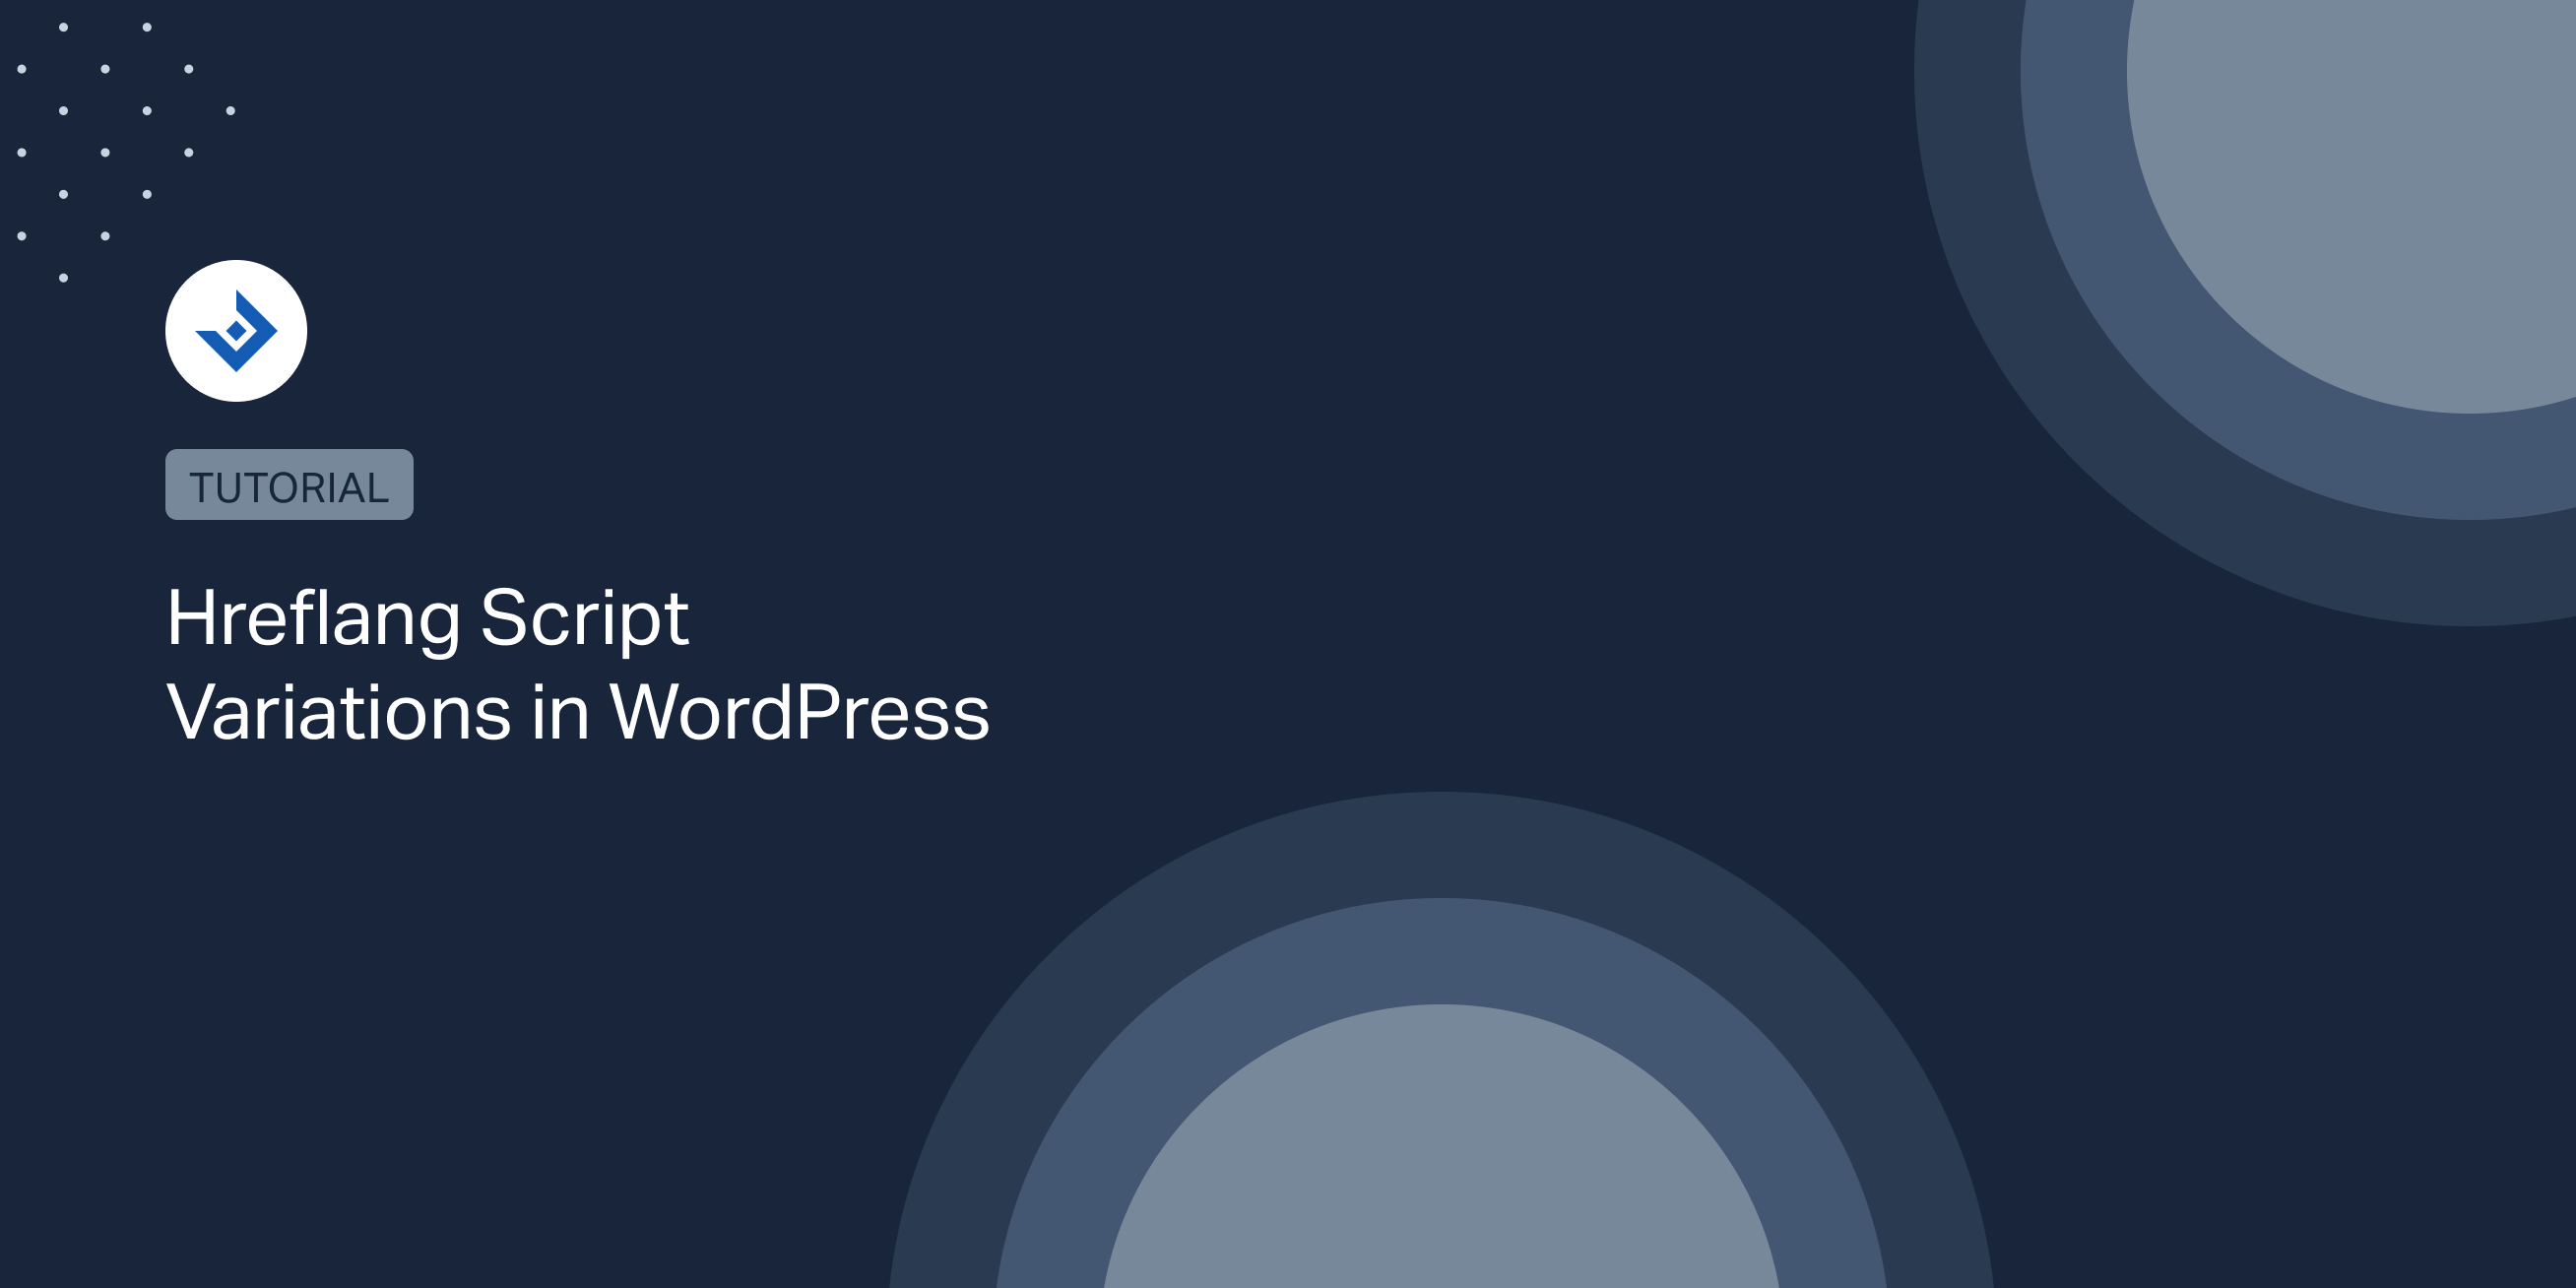 Hreflang Script Variations in WordPress